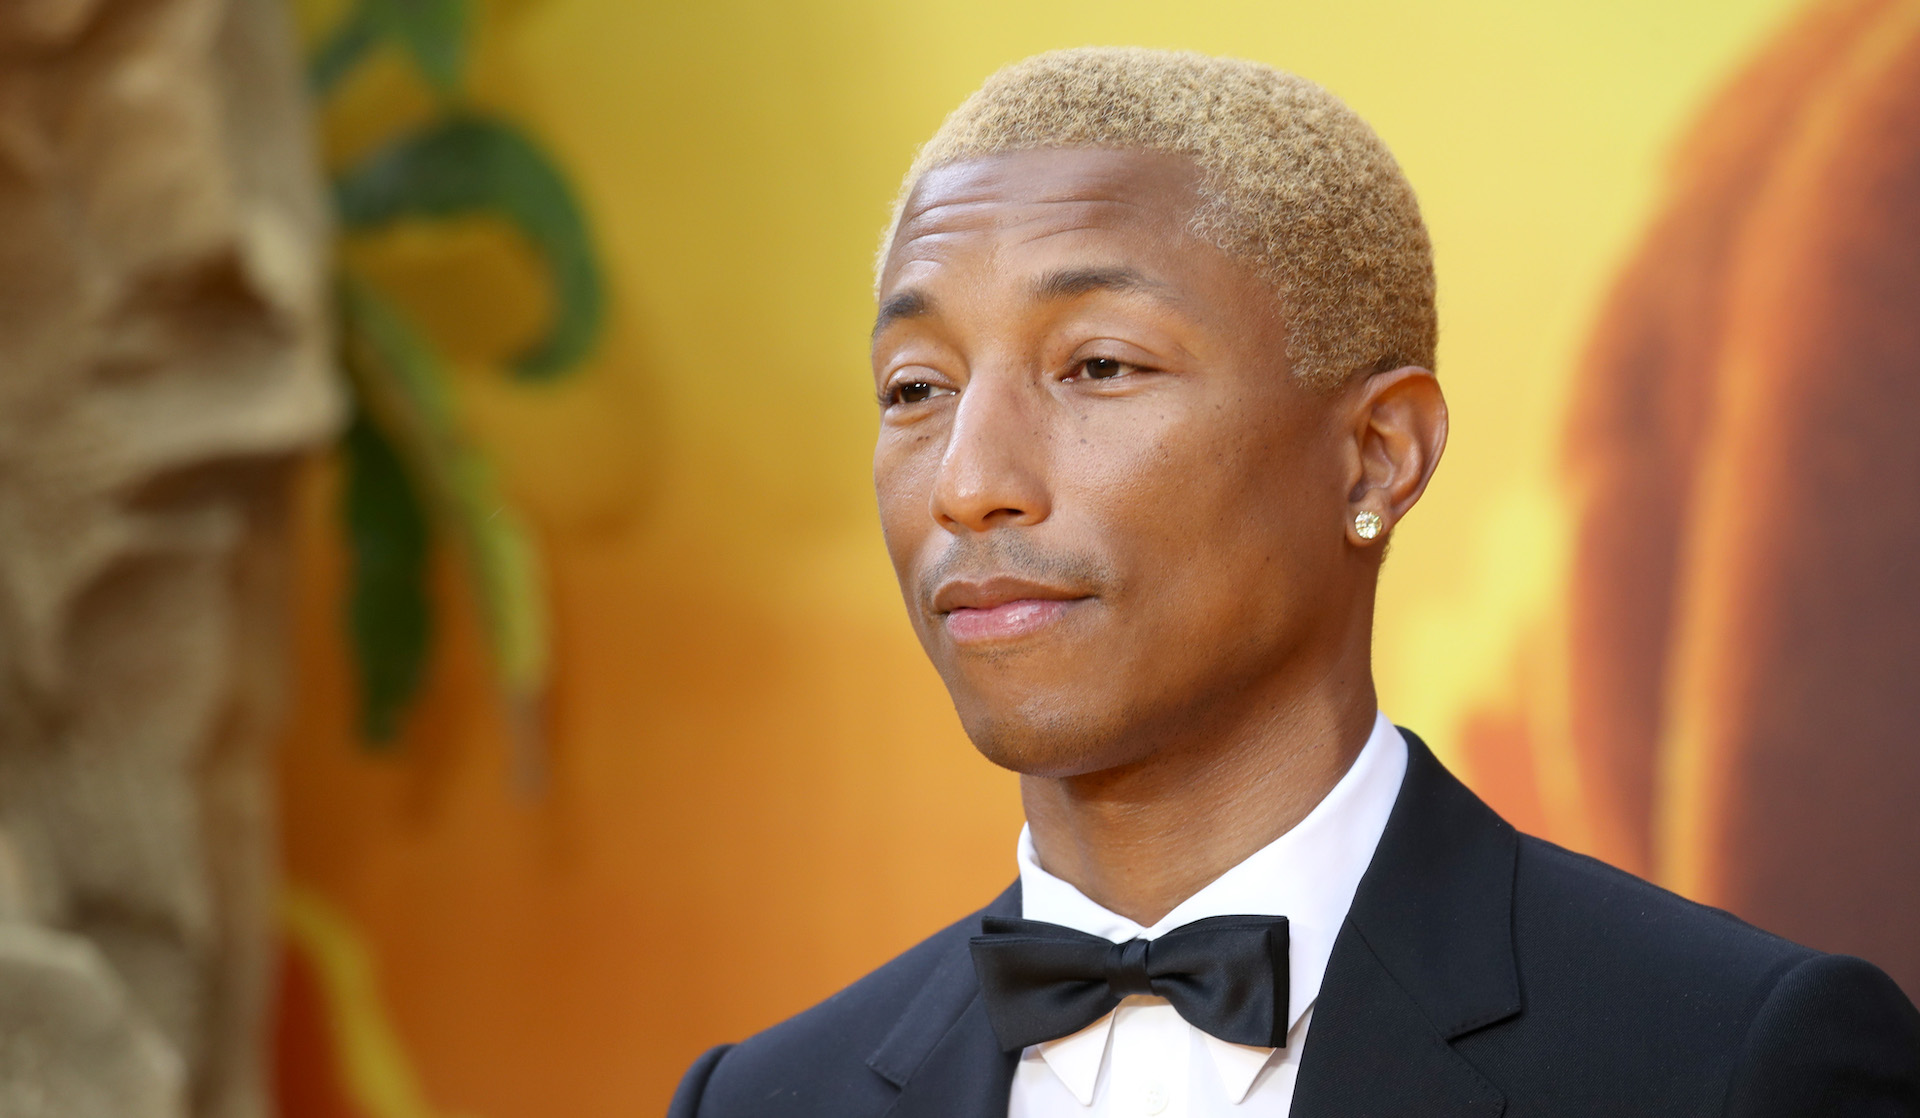 Chanel Hosts Pharrell Williams' Black Ambition 2022 Prize Winners